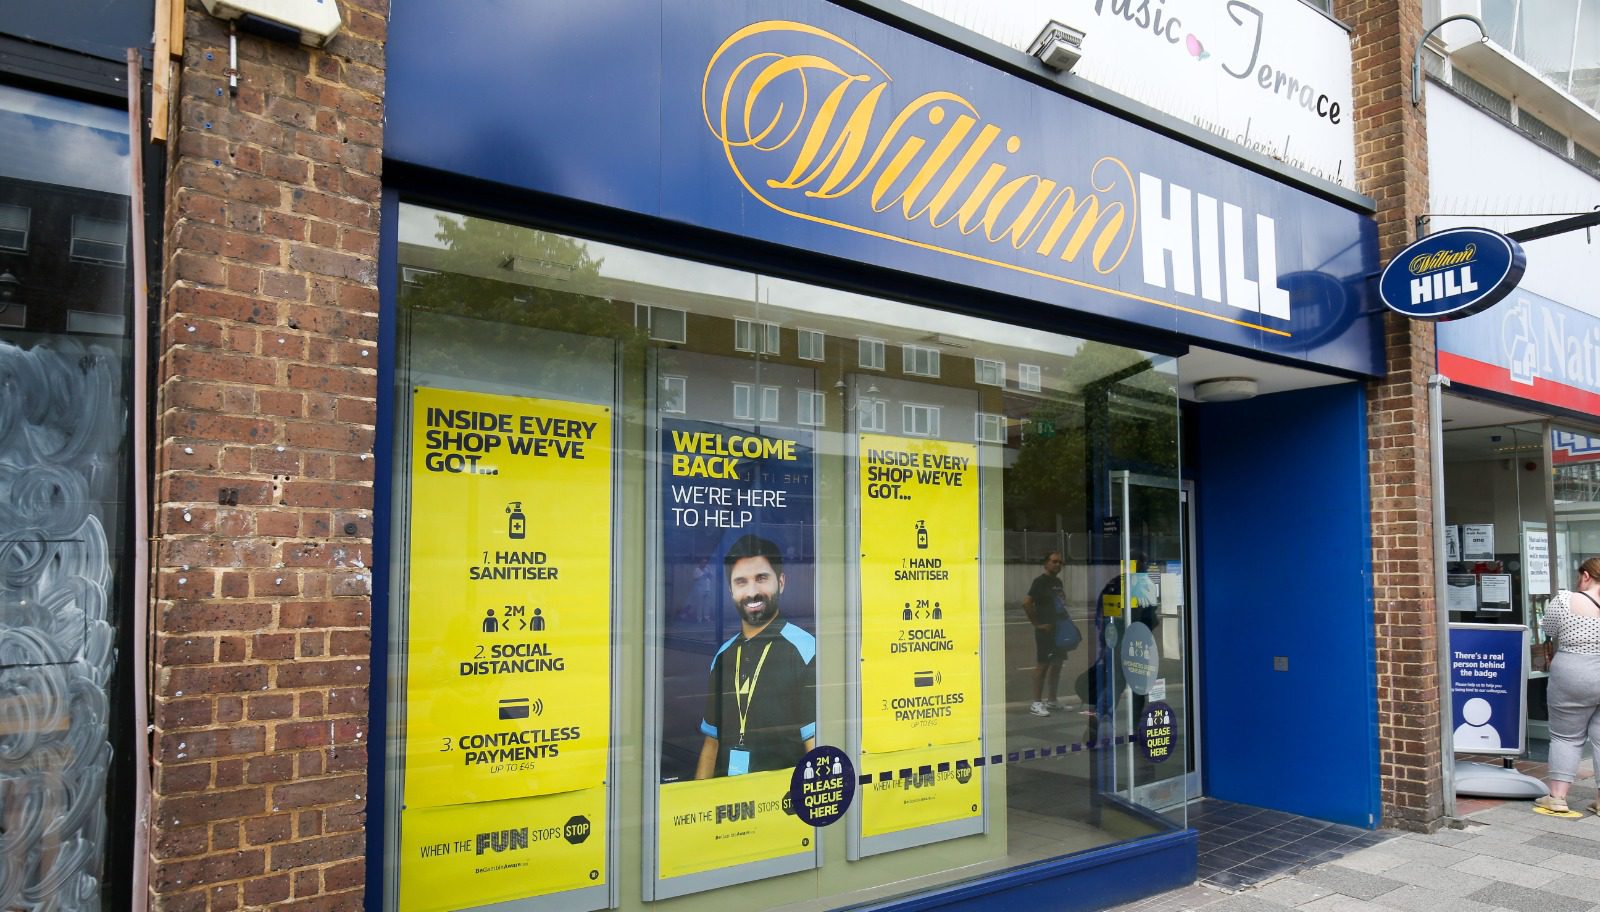 William Hill acquisition